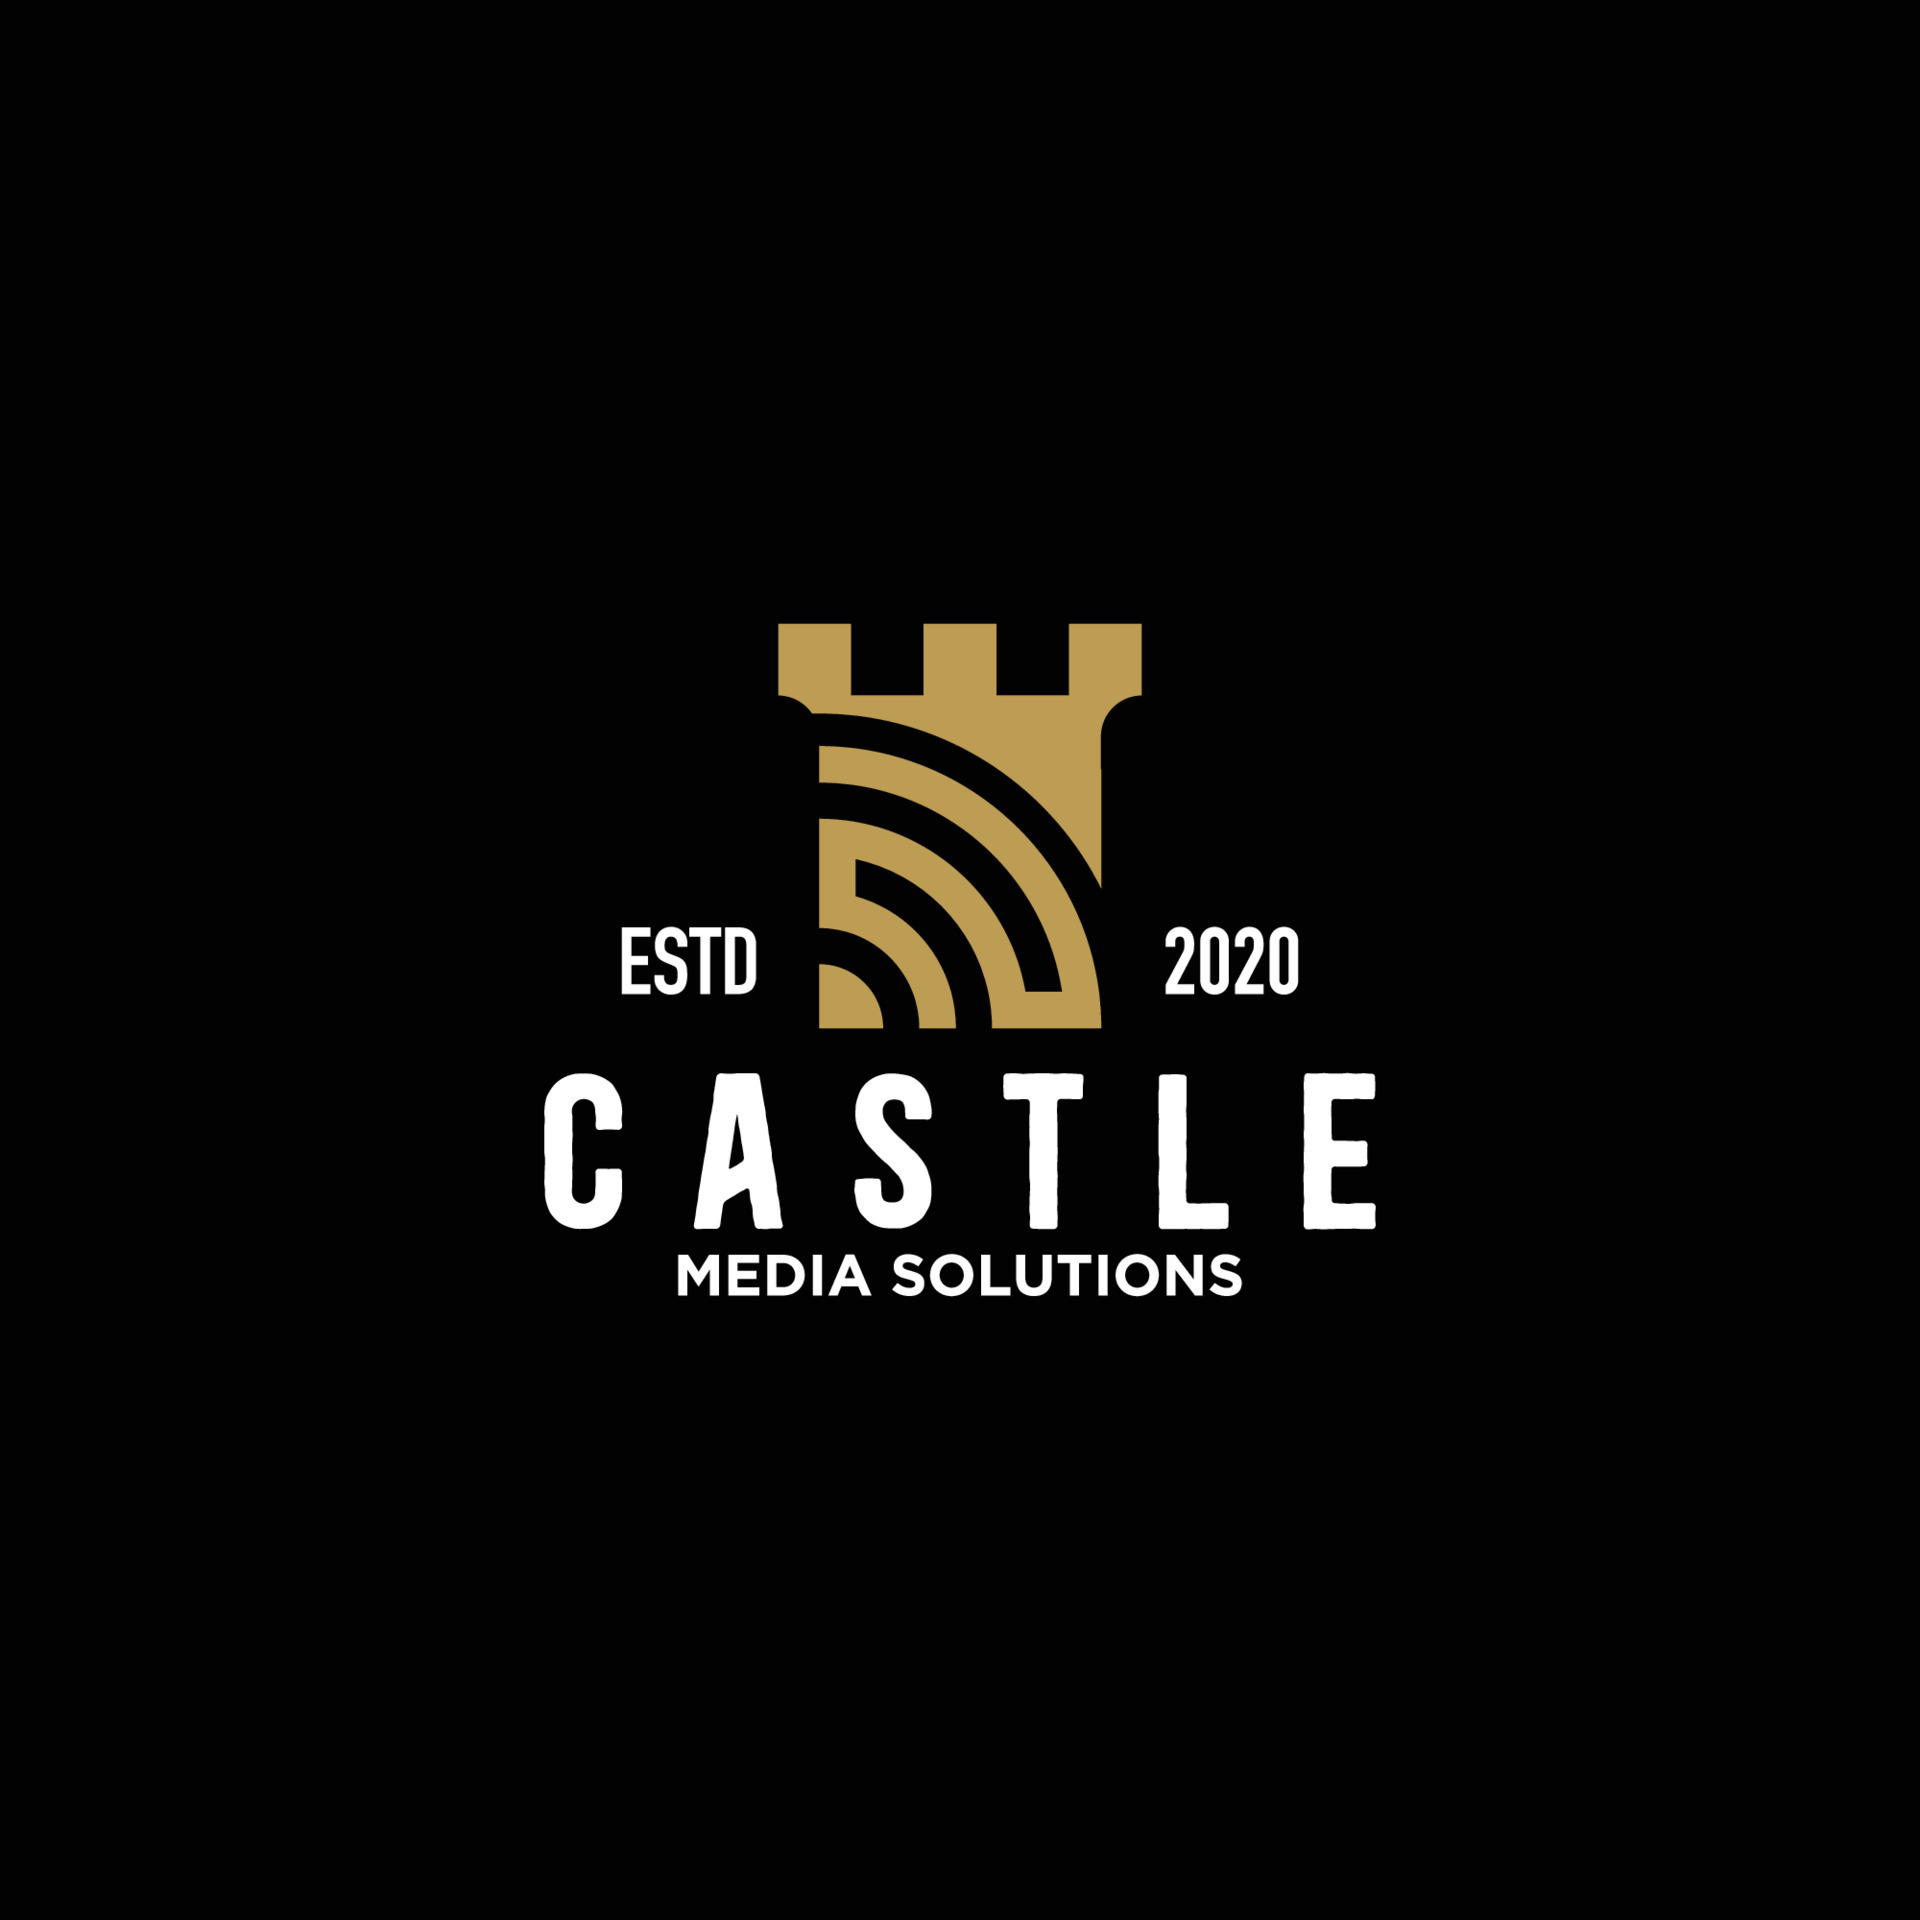 Amazing castle logo design illustration 17701155 Vector Art at Vecteezy